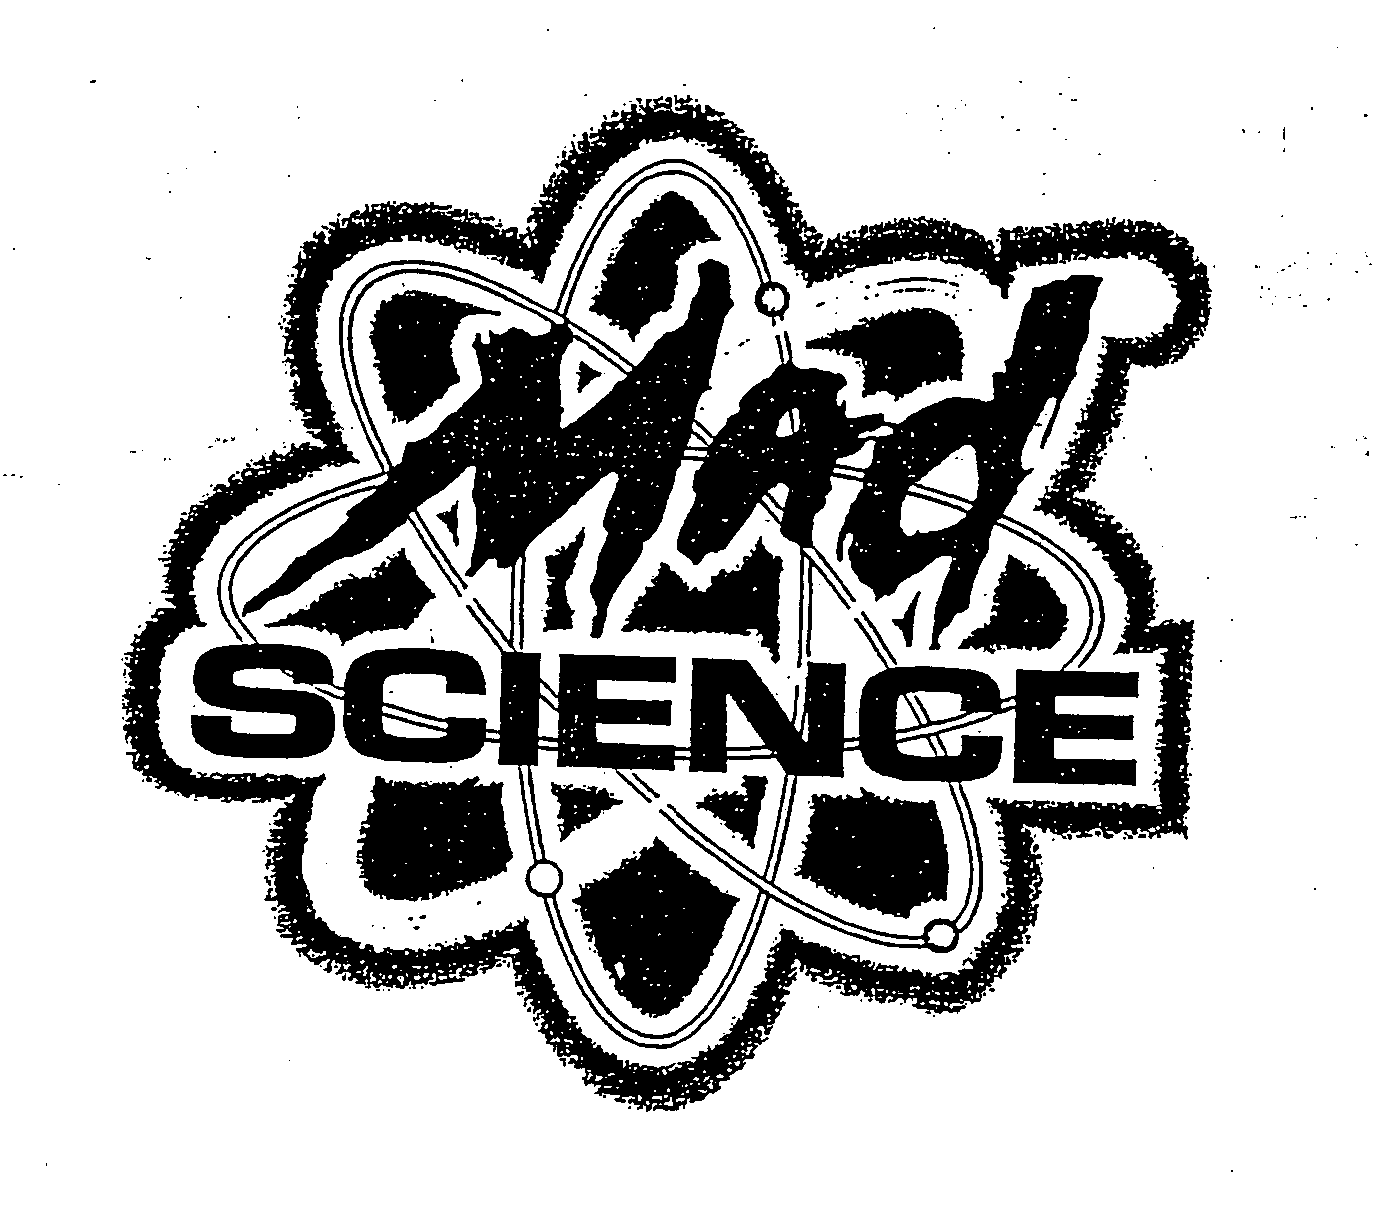 Trademark Logo MAD SCIENCE